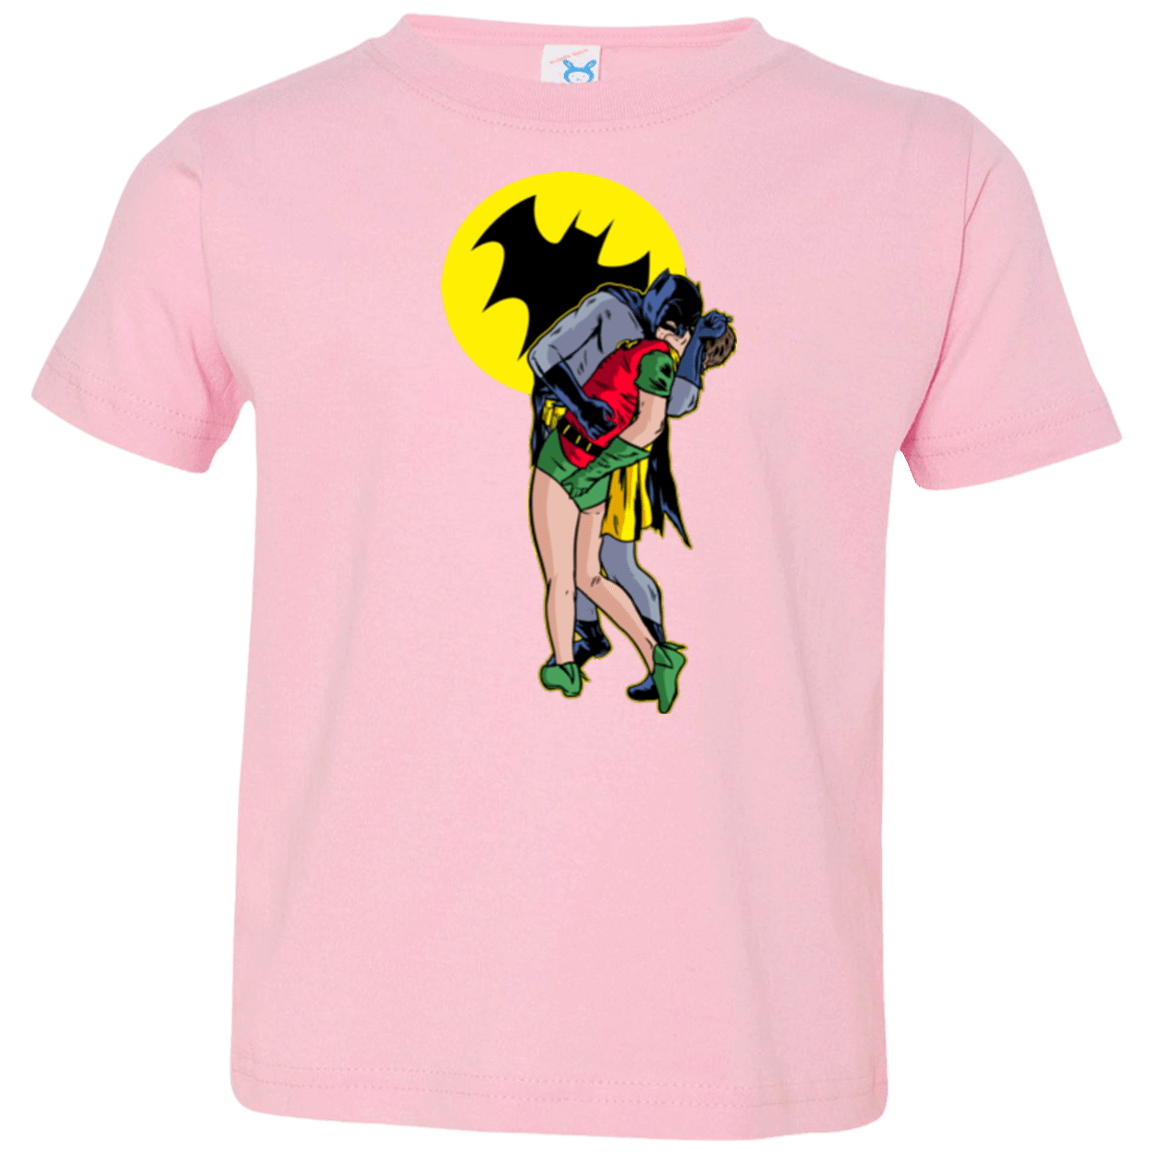 T-Shirts Pink / 2T Batkiss Signal Toddler Premium T-Shirt